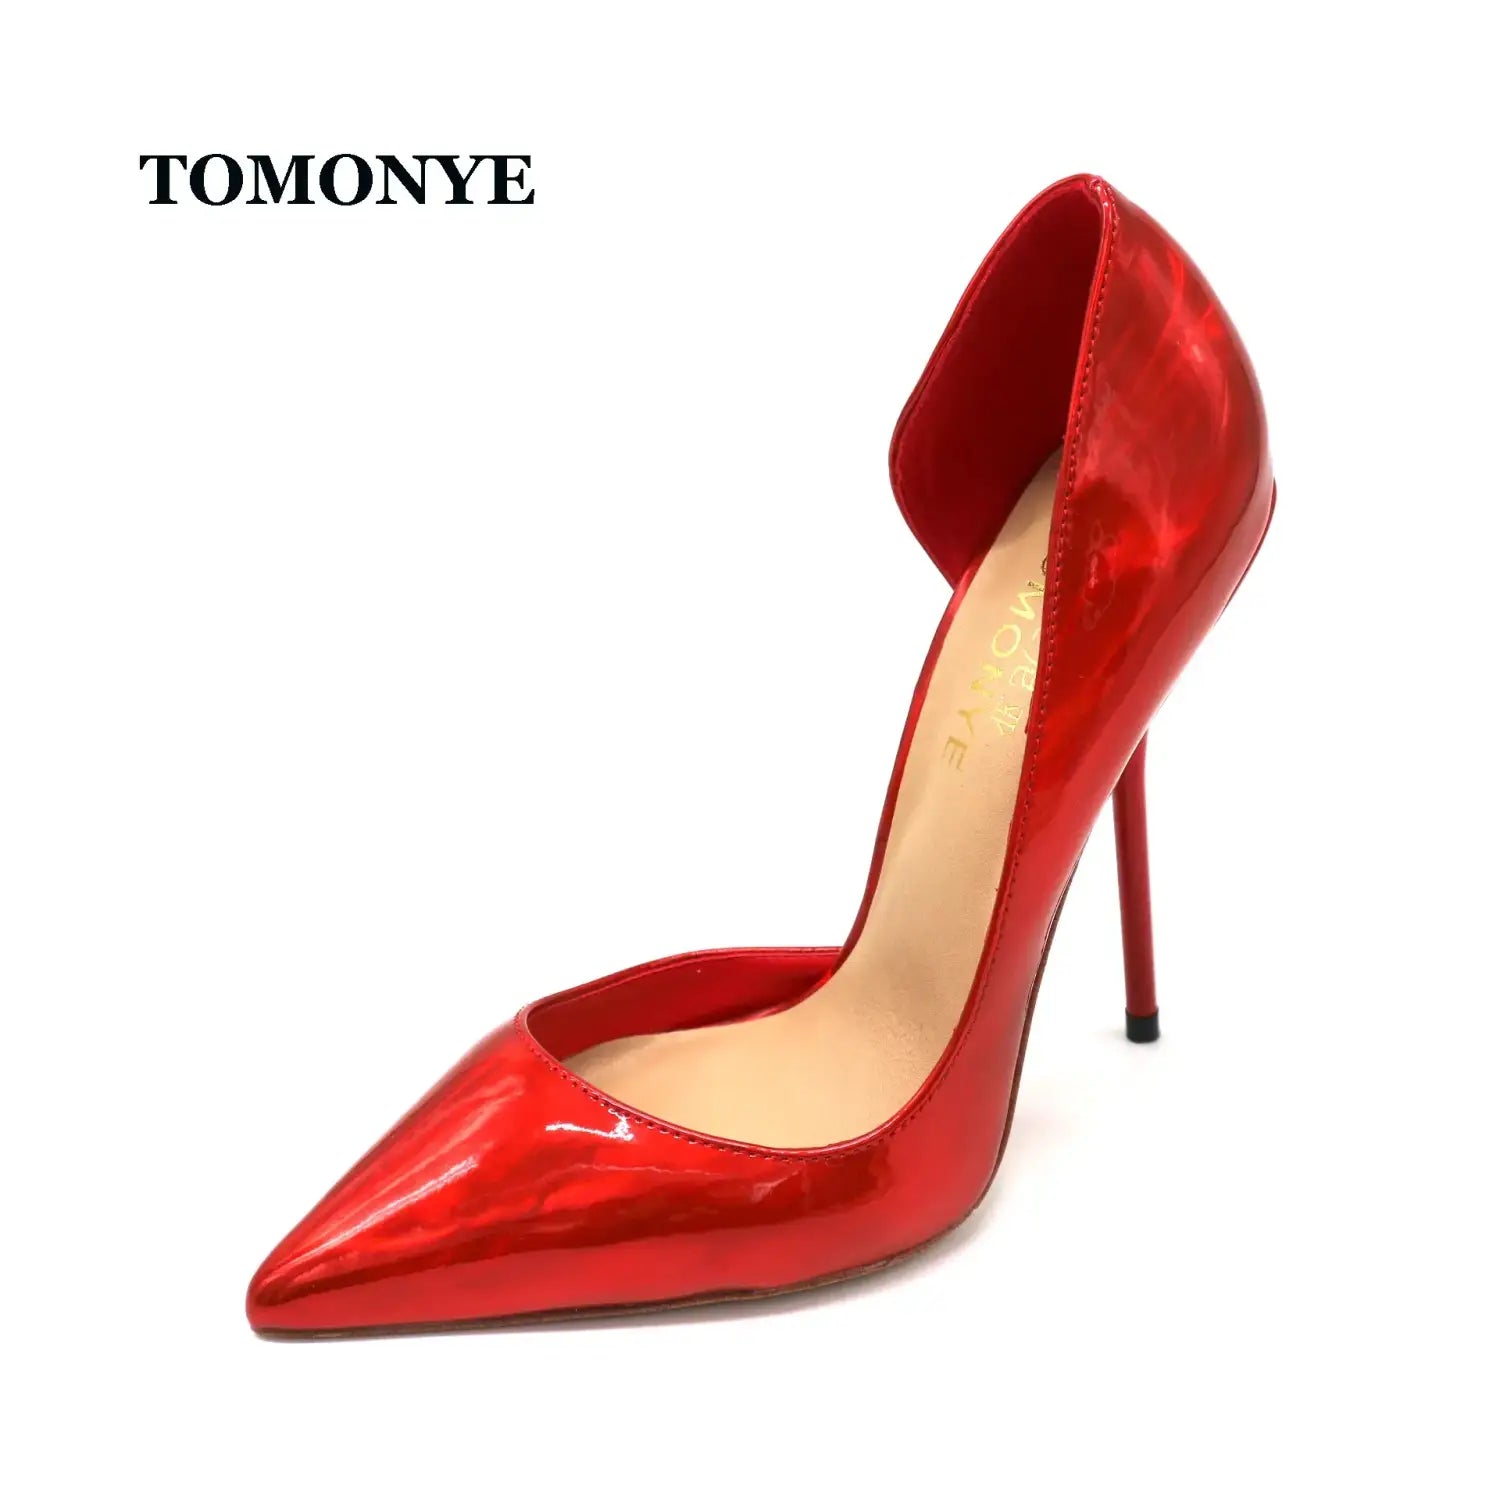 Cherry perfect heels stiletto pumps